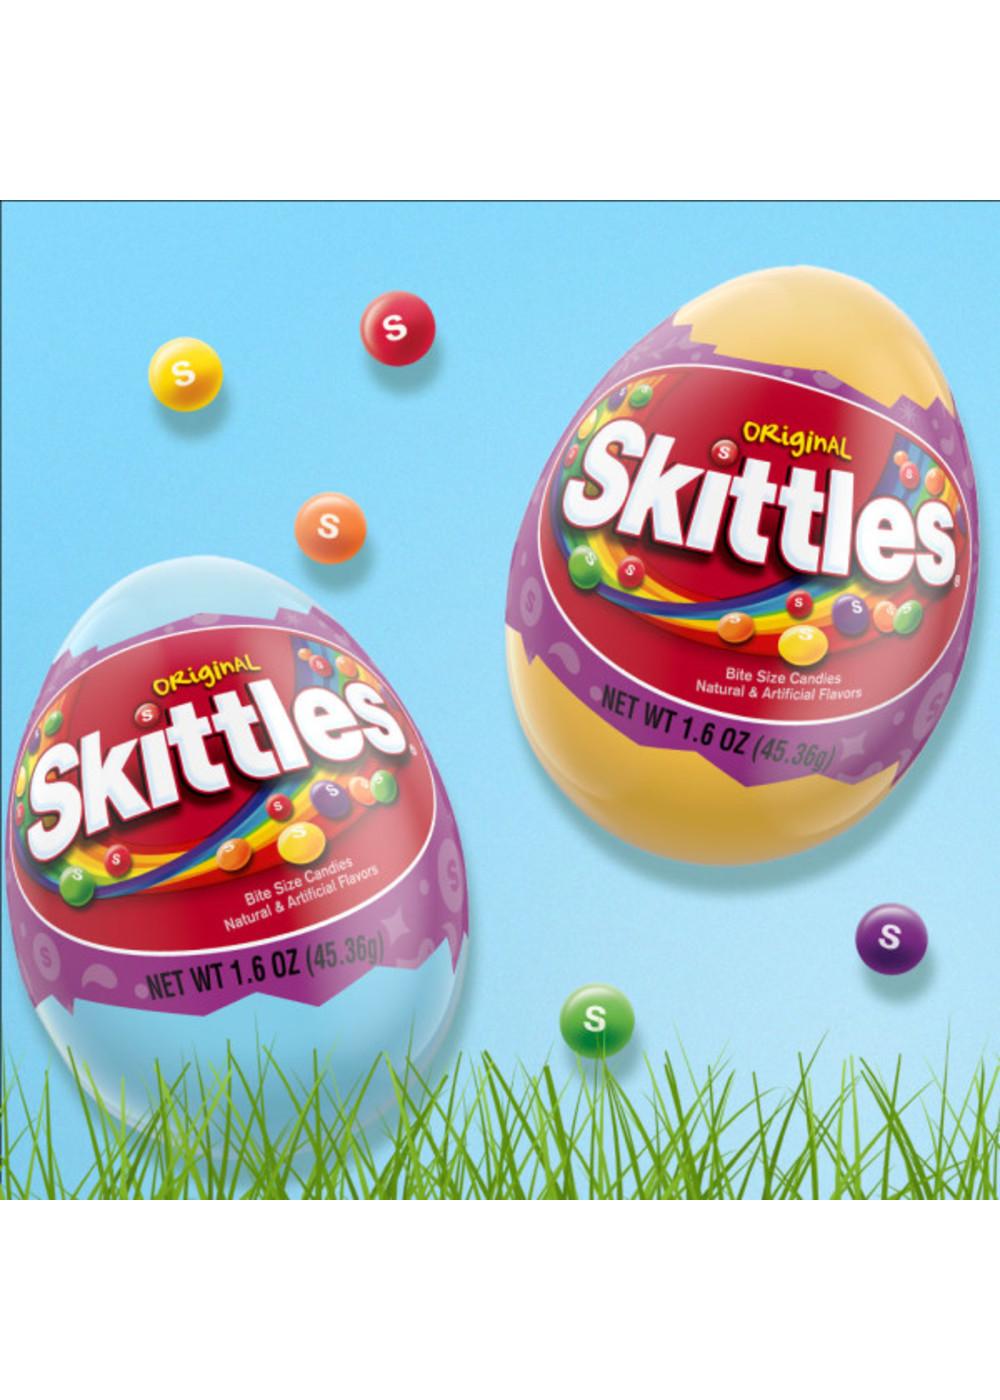 Skittles Original Candy Easter Egg; image 6 of 7